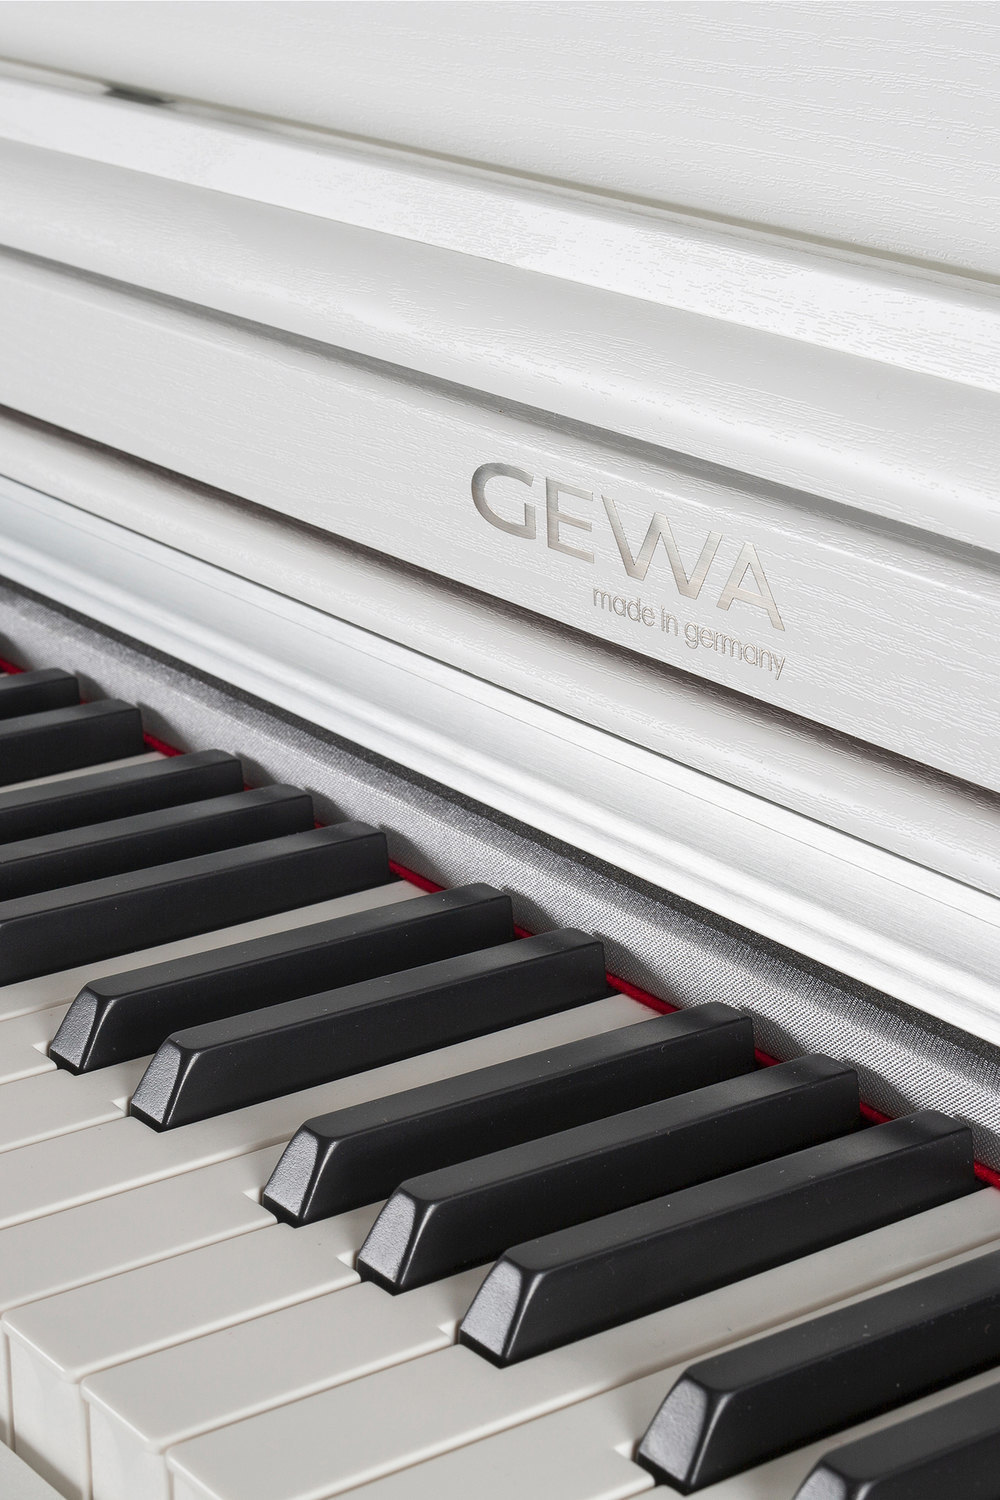 Gewa Up 365 G Blanc Mat - Digital piano with stand - Variation 4